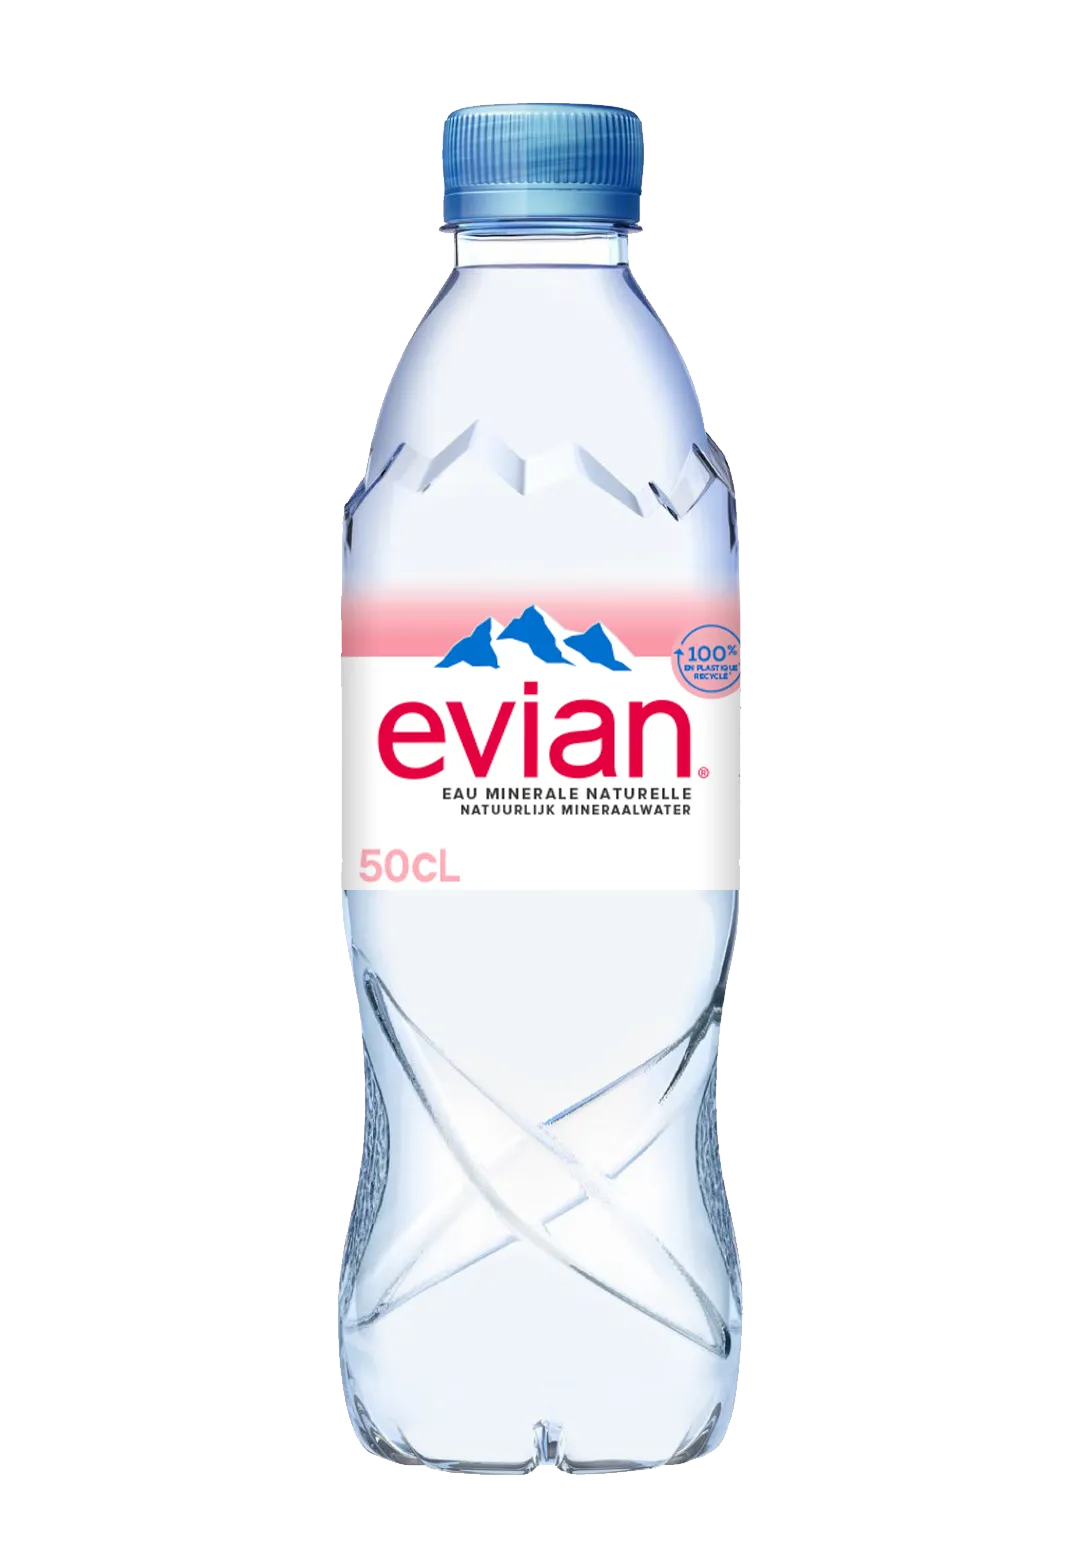 50cL - Evian